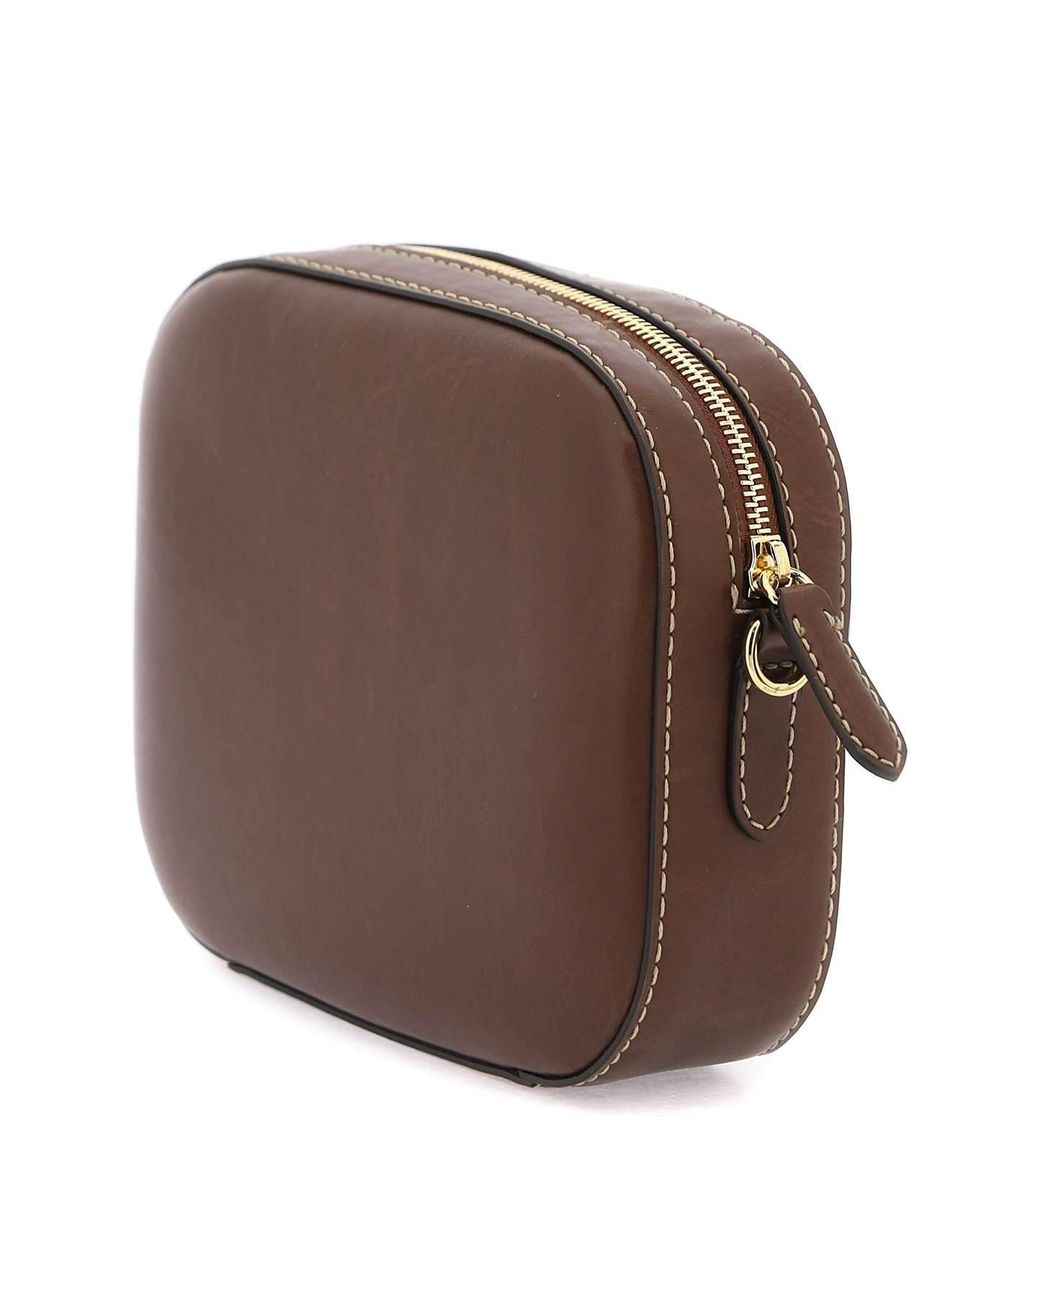 New! M.C. Greta Brown Handbag | Brown handbag, Clothes design, Fashion